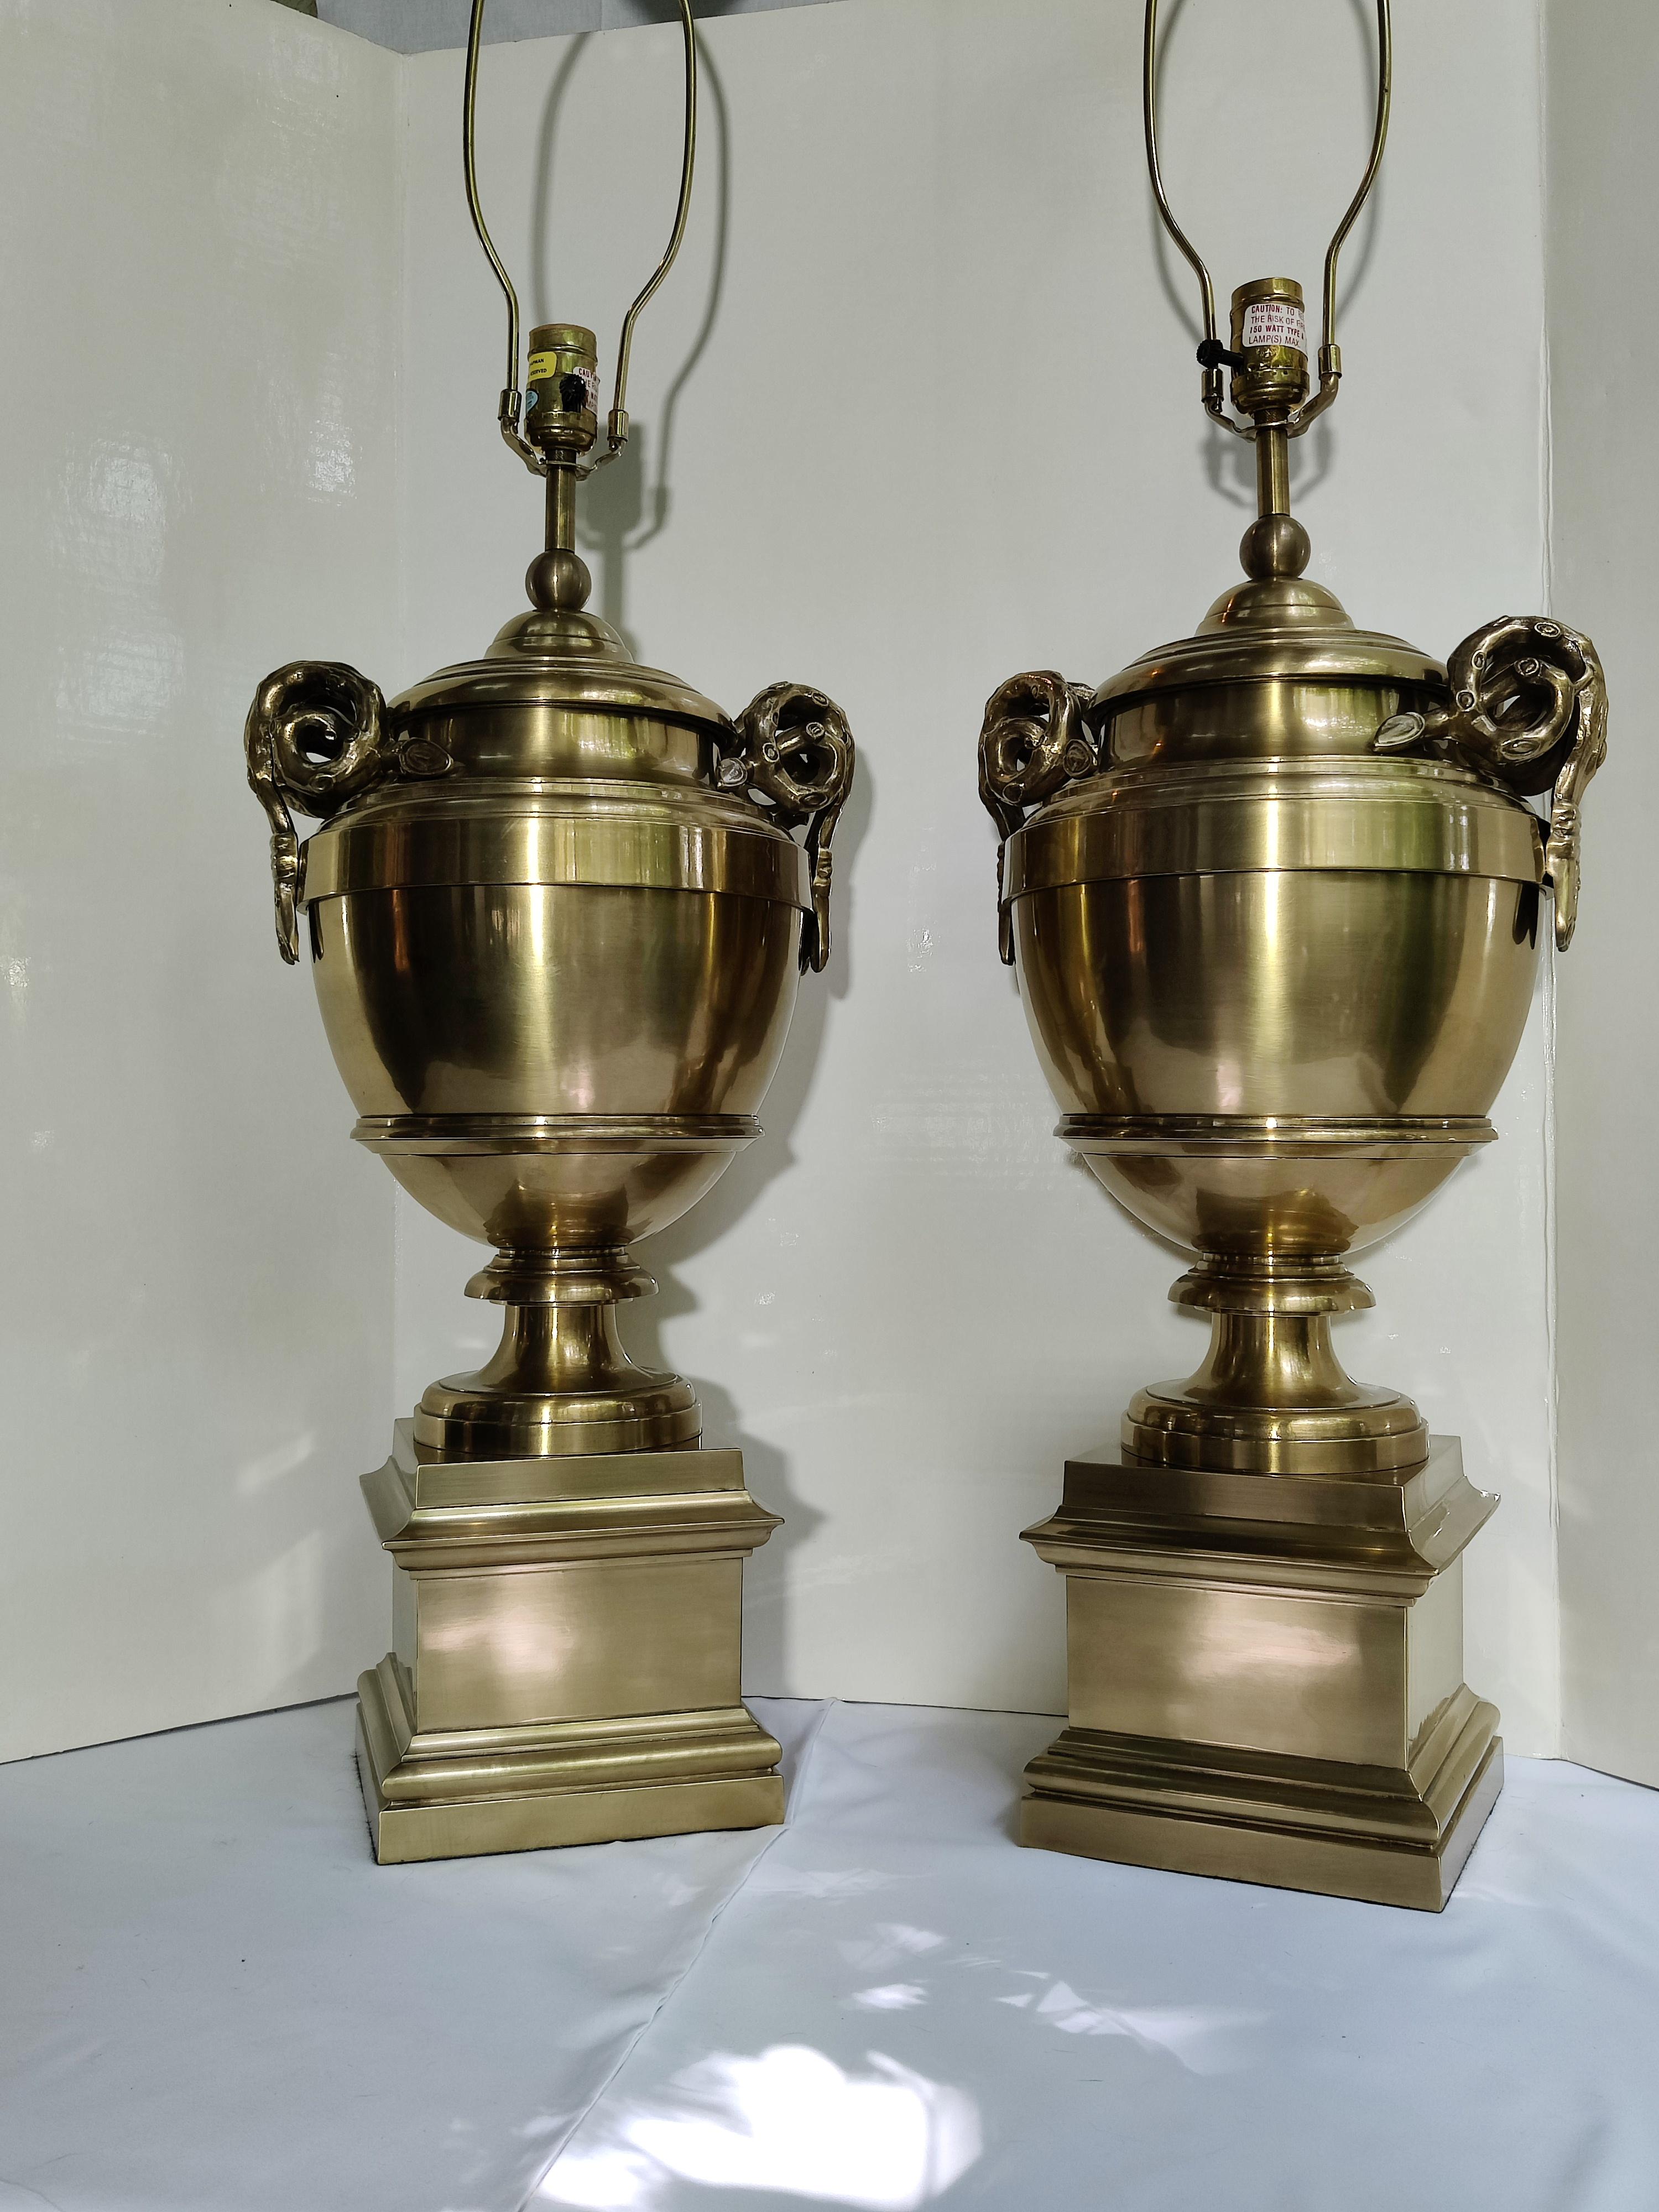 Pair of Heavy Brass Chapman Urn Ram Horn Table Lamps
Original Large Brass Finials
Horn to Horn is 11